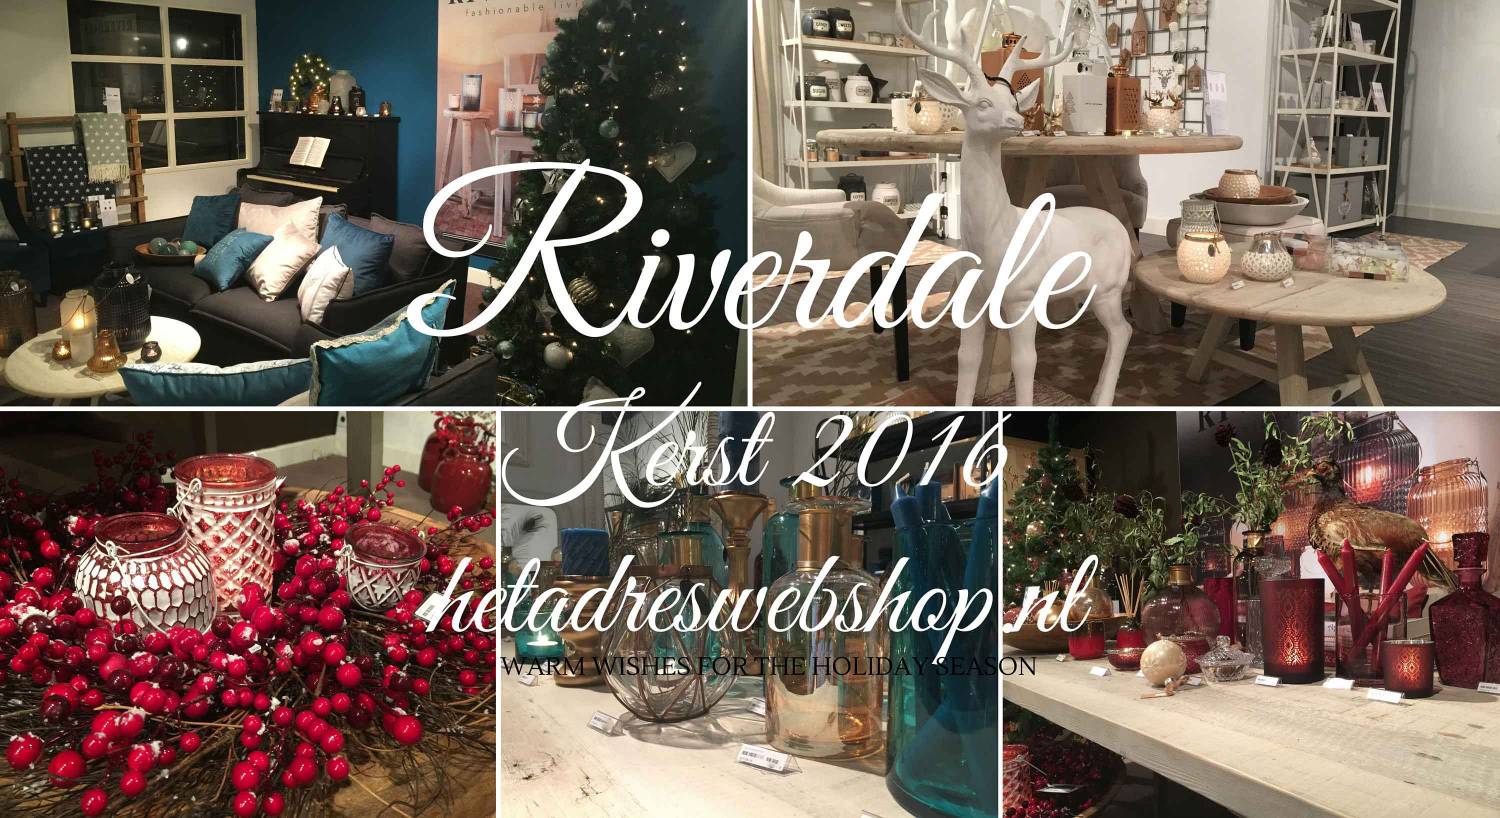 Toegepast grens Vliegveld Riverdale Kerstcollectie, The christmas society 2016 - Hetadreswebshop.nl